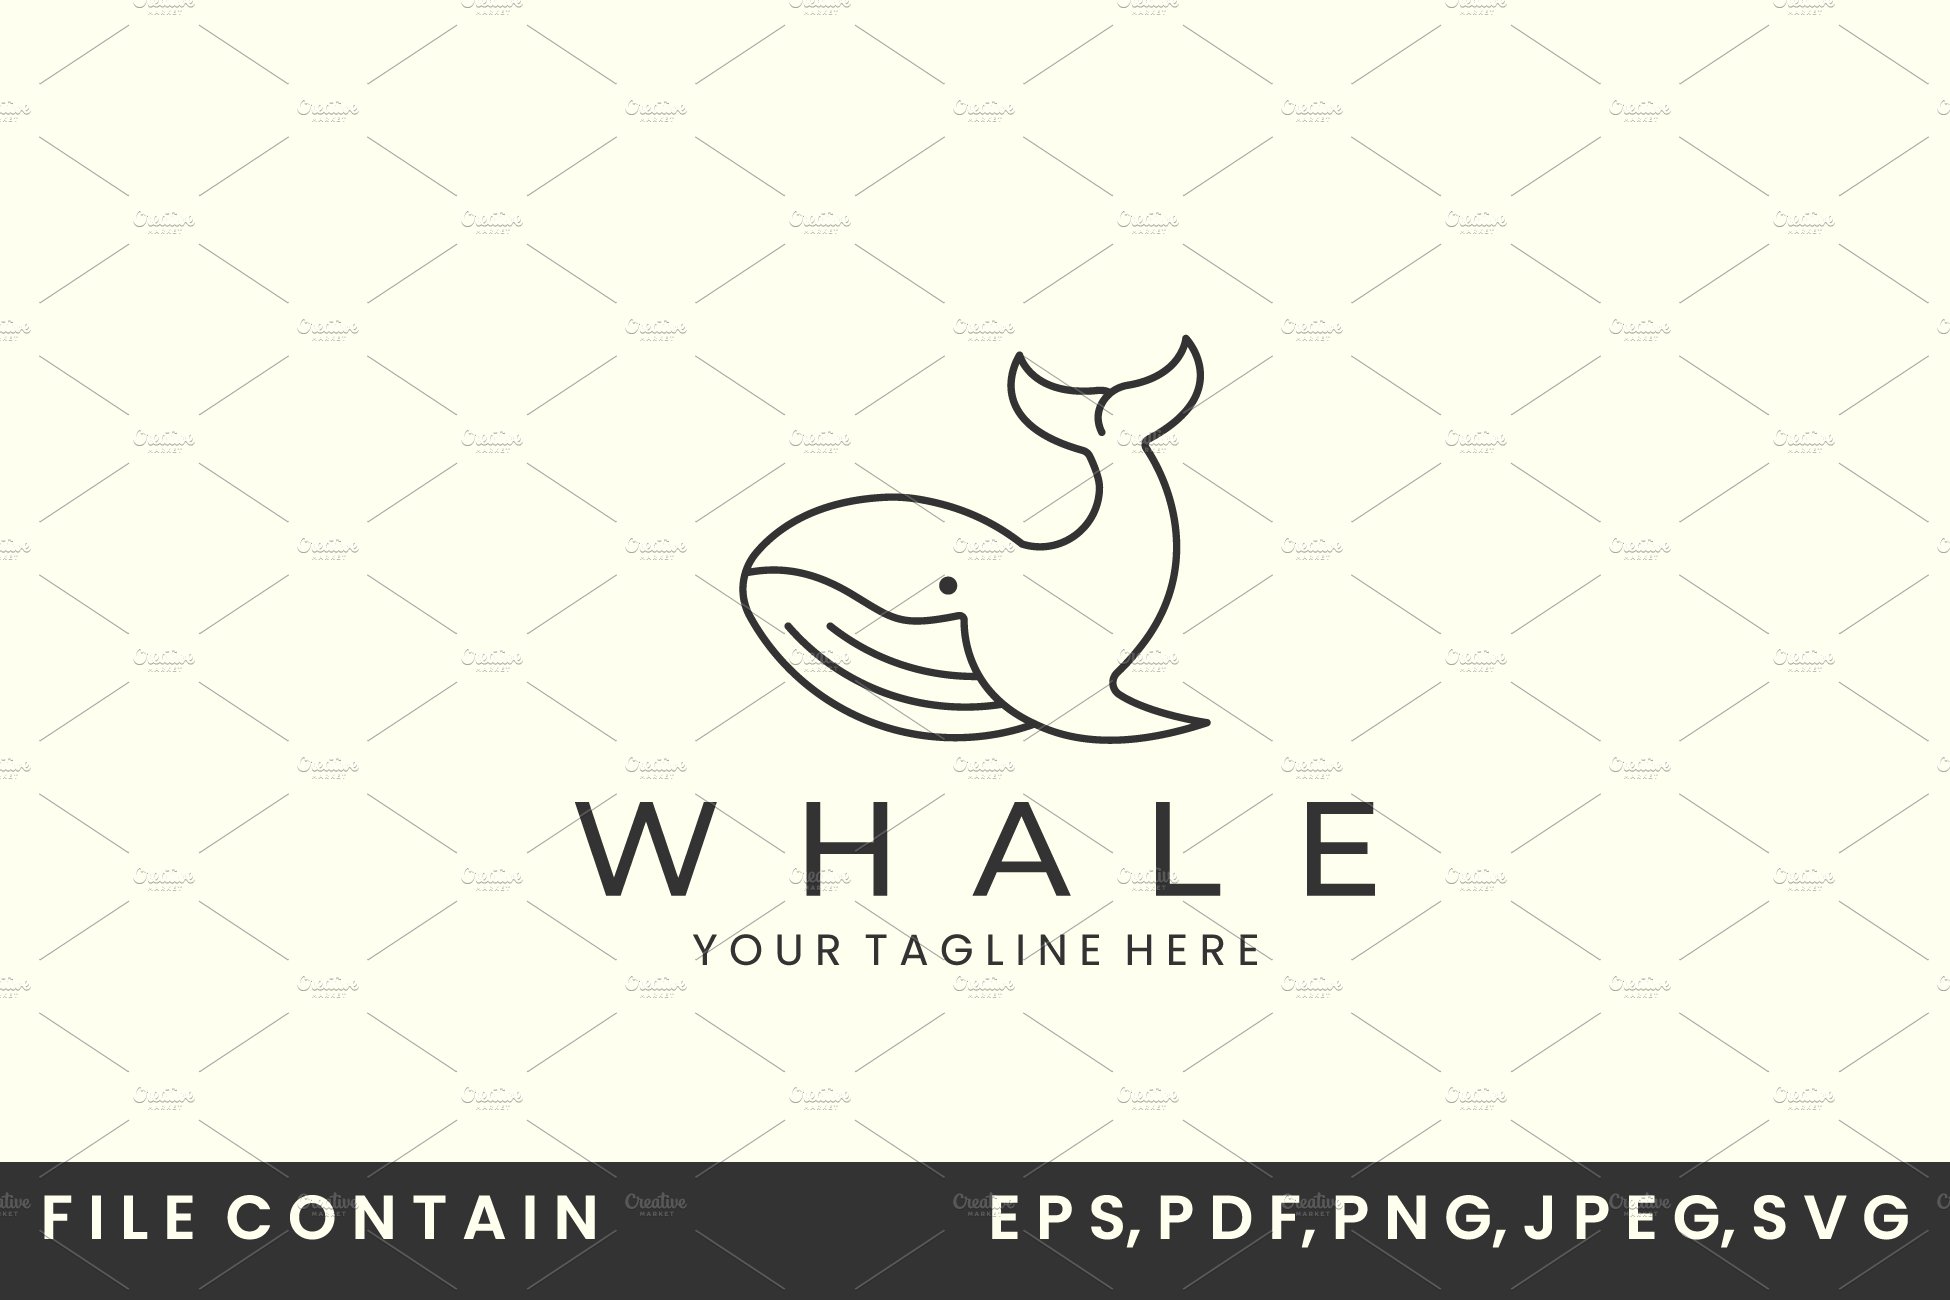 line art whale minimalist style logo cover image.